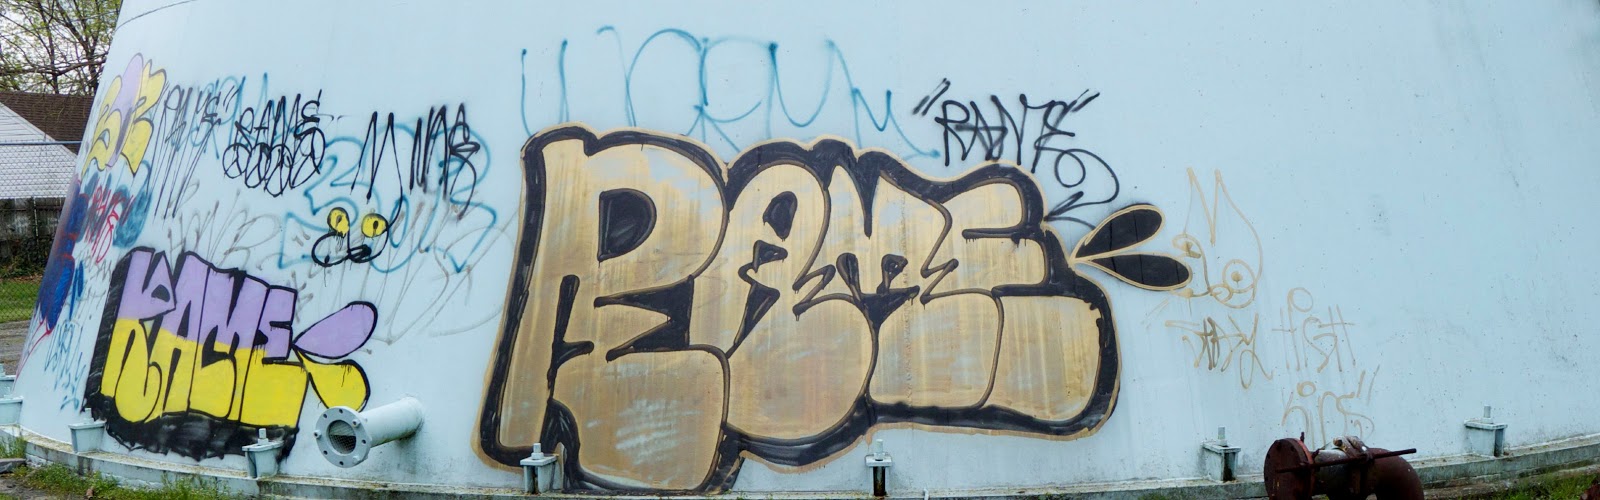 Delaware Anti Graffiti Brigades: Willow Run Graffiti - ROME RANE